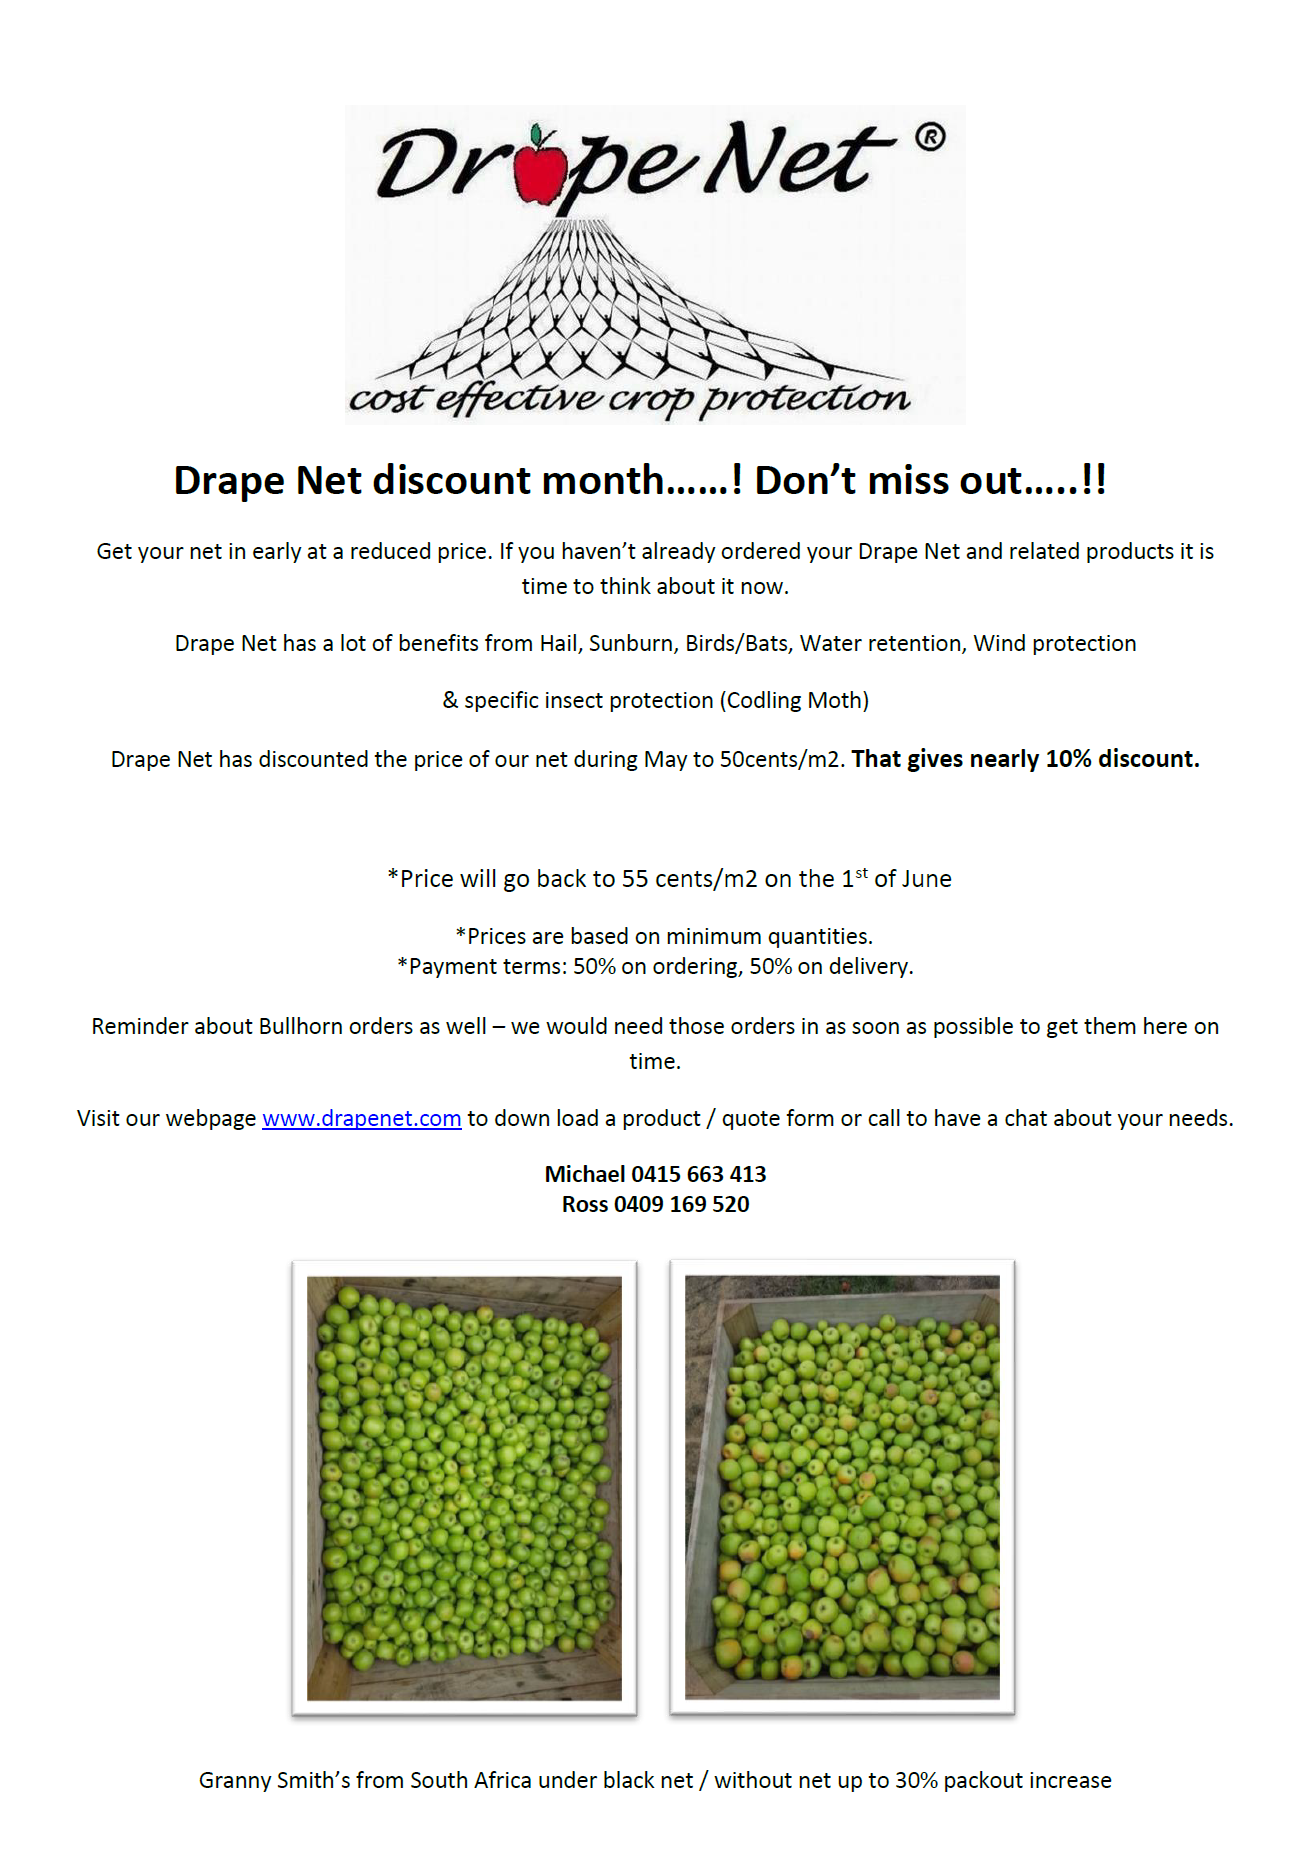 Drape Net discount month